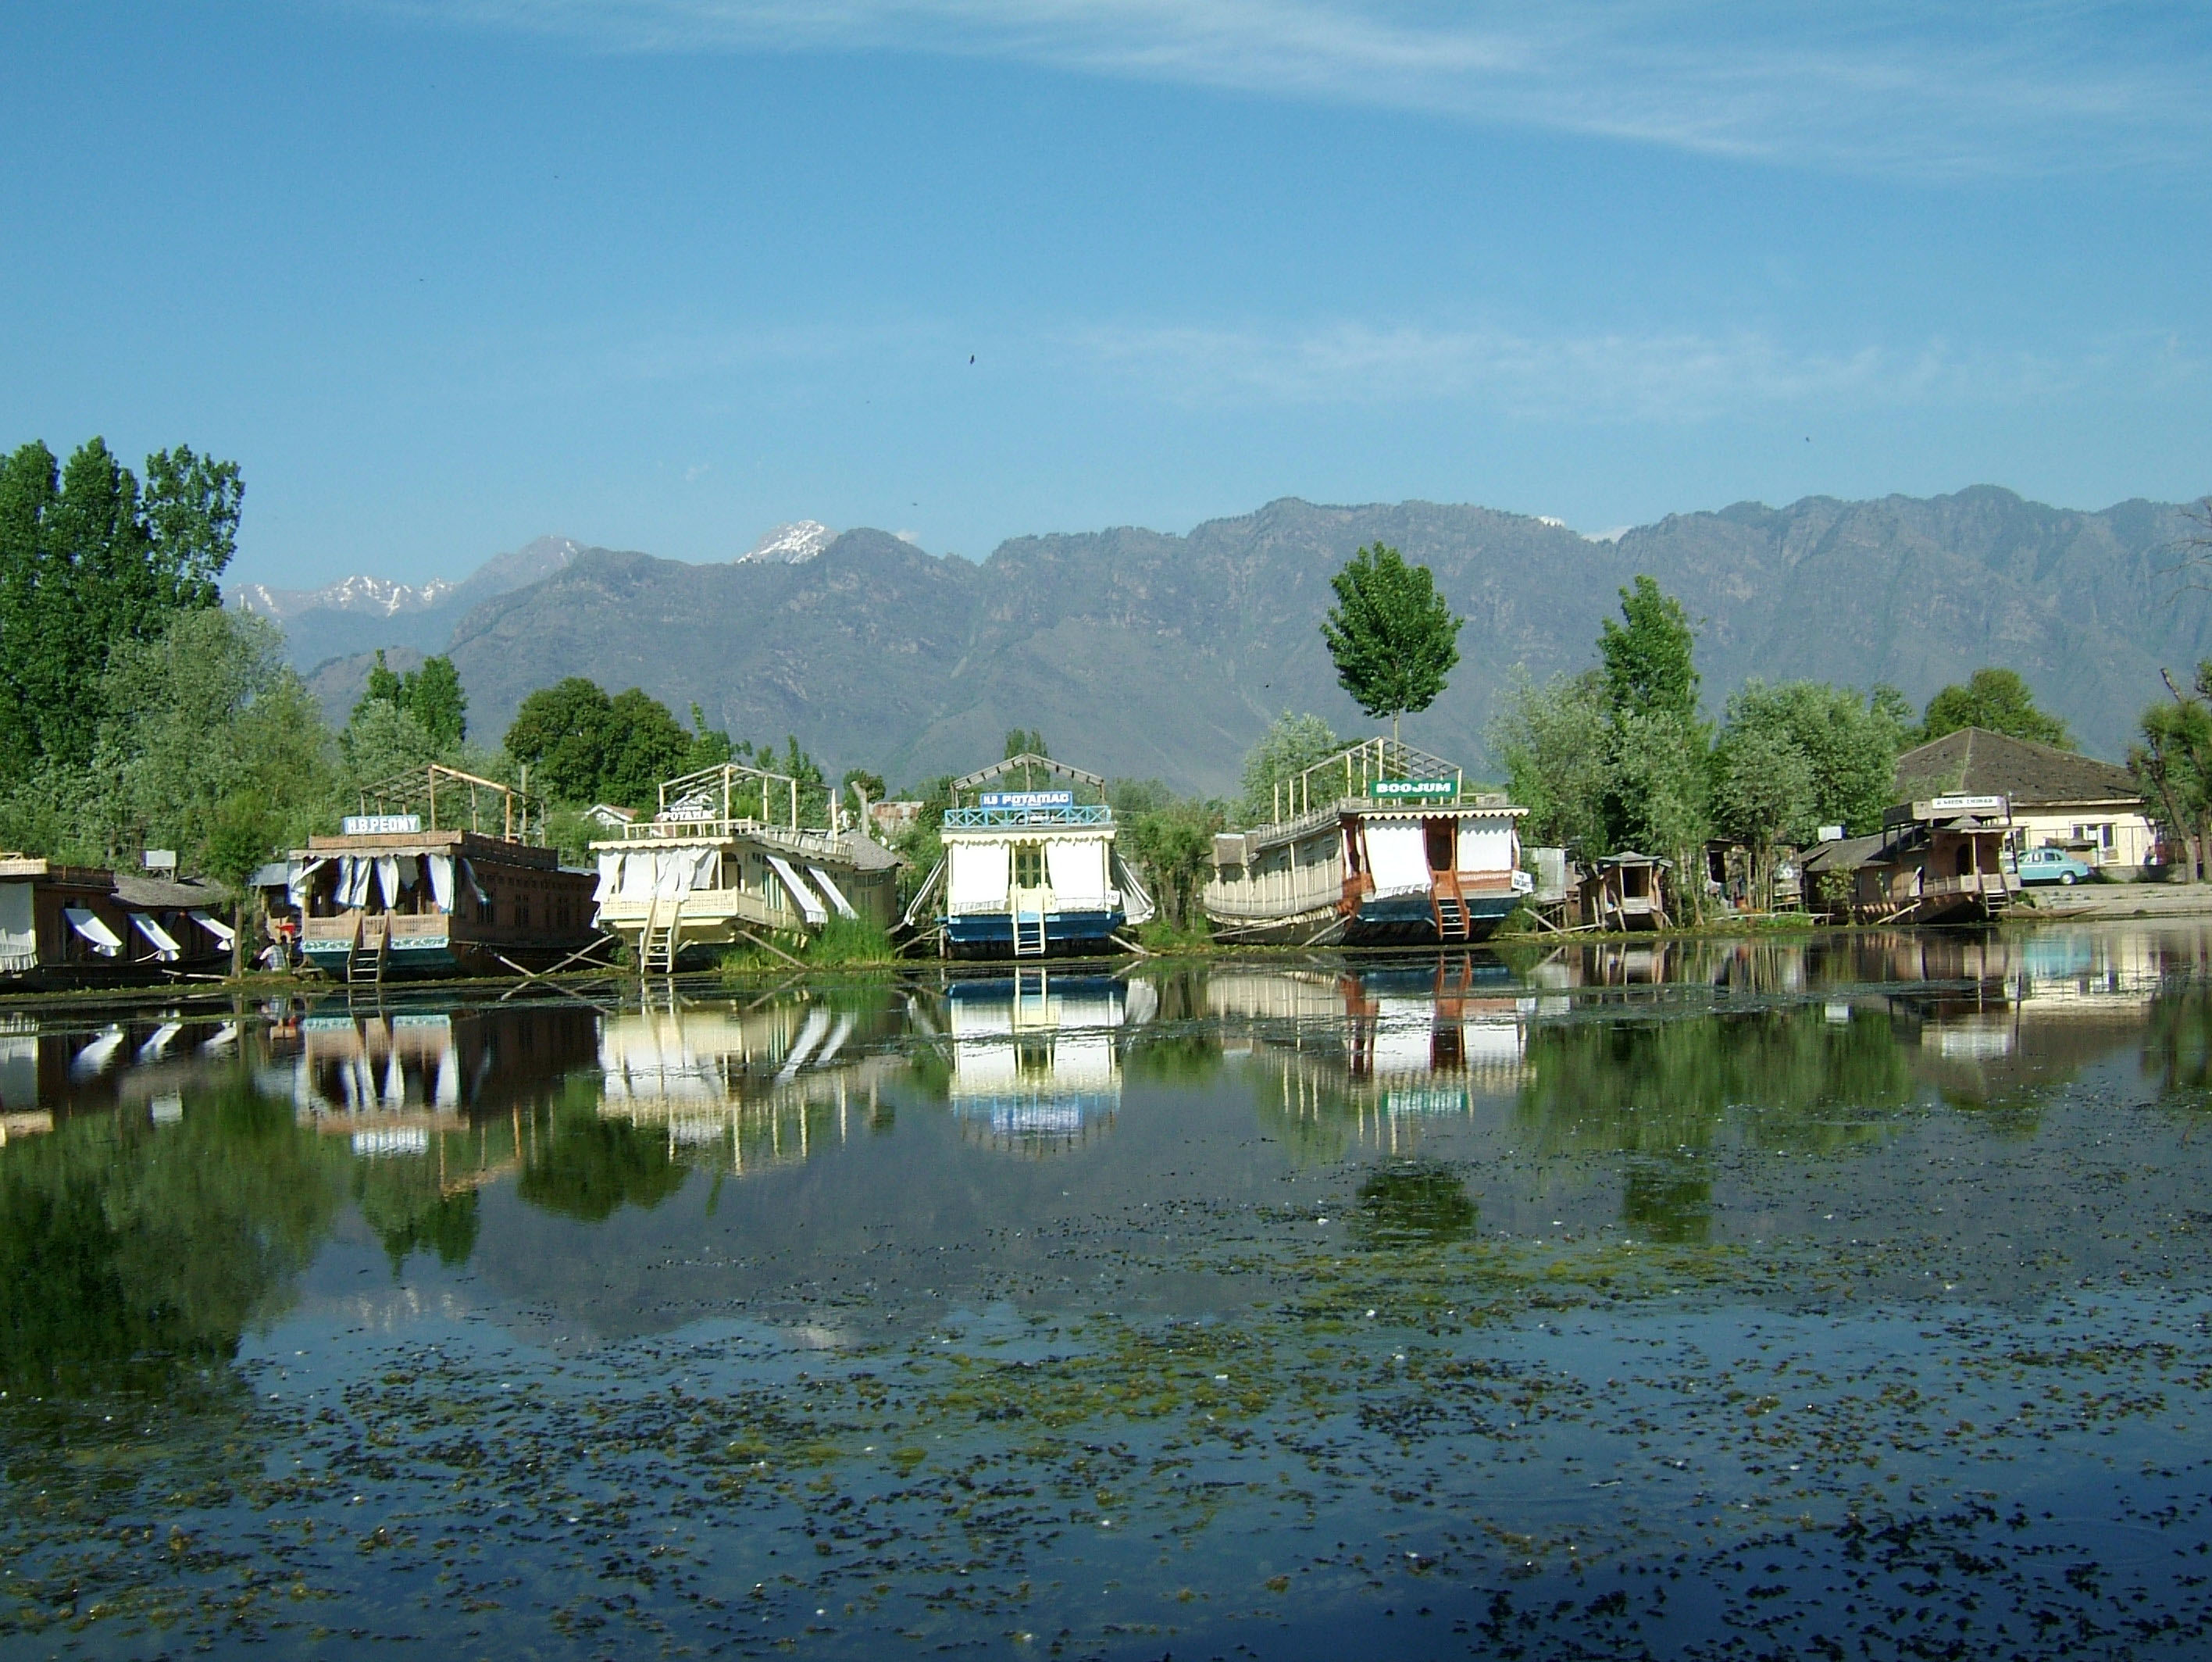 Kashmir houseboats Srinagar Dal lake India Apr 2004 16